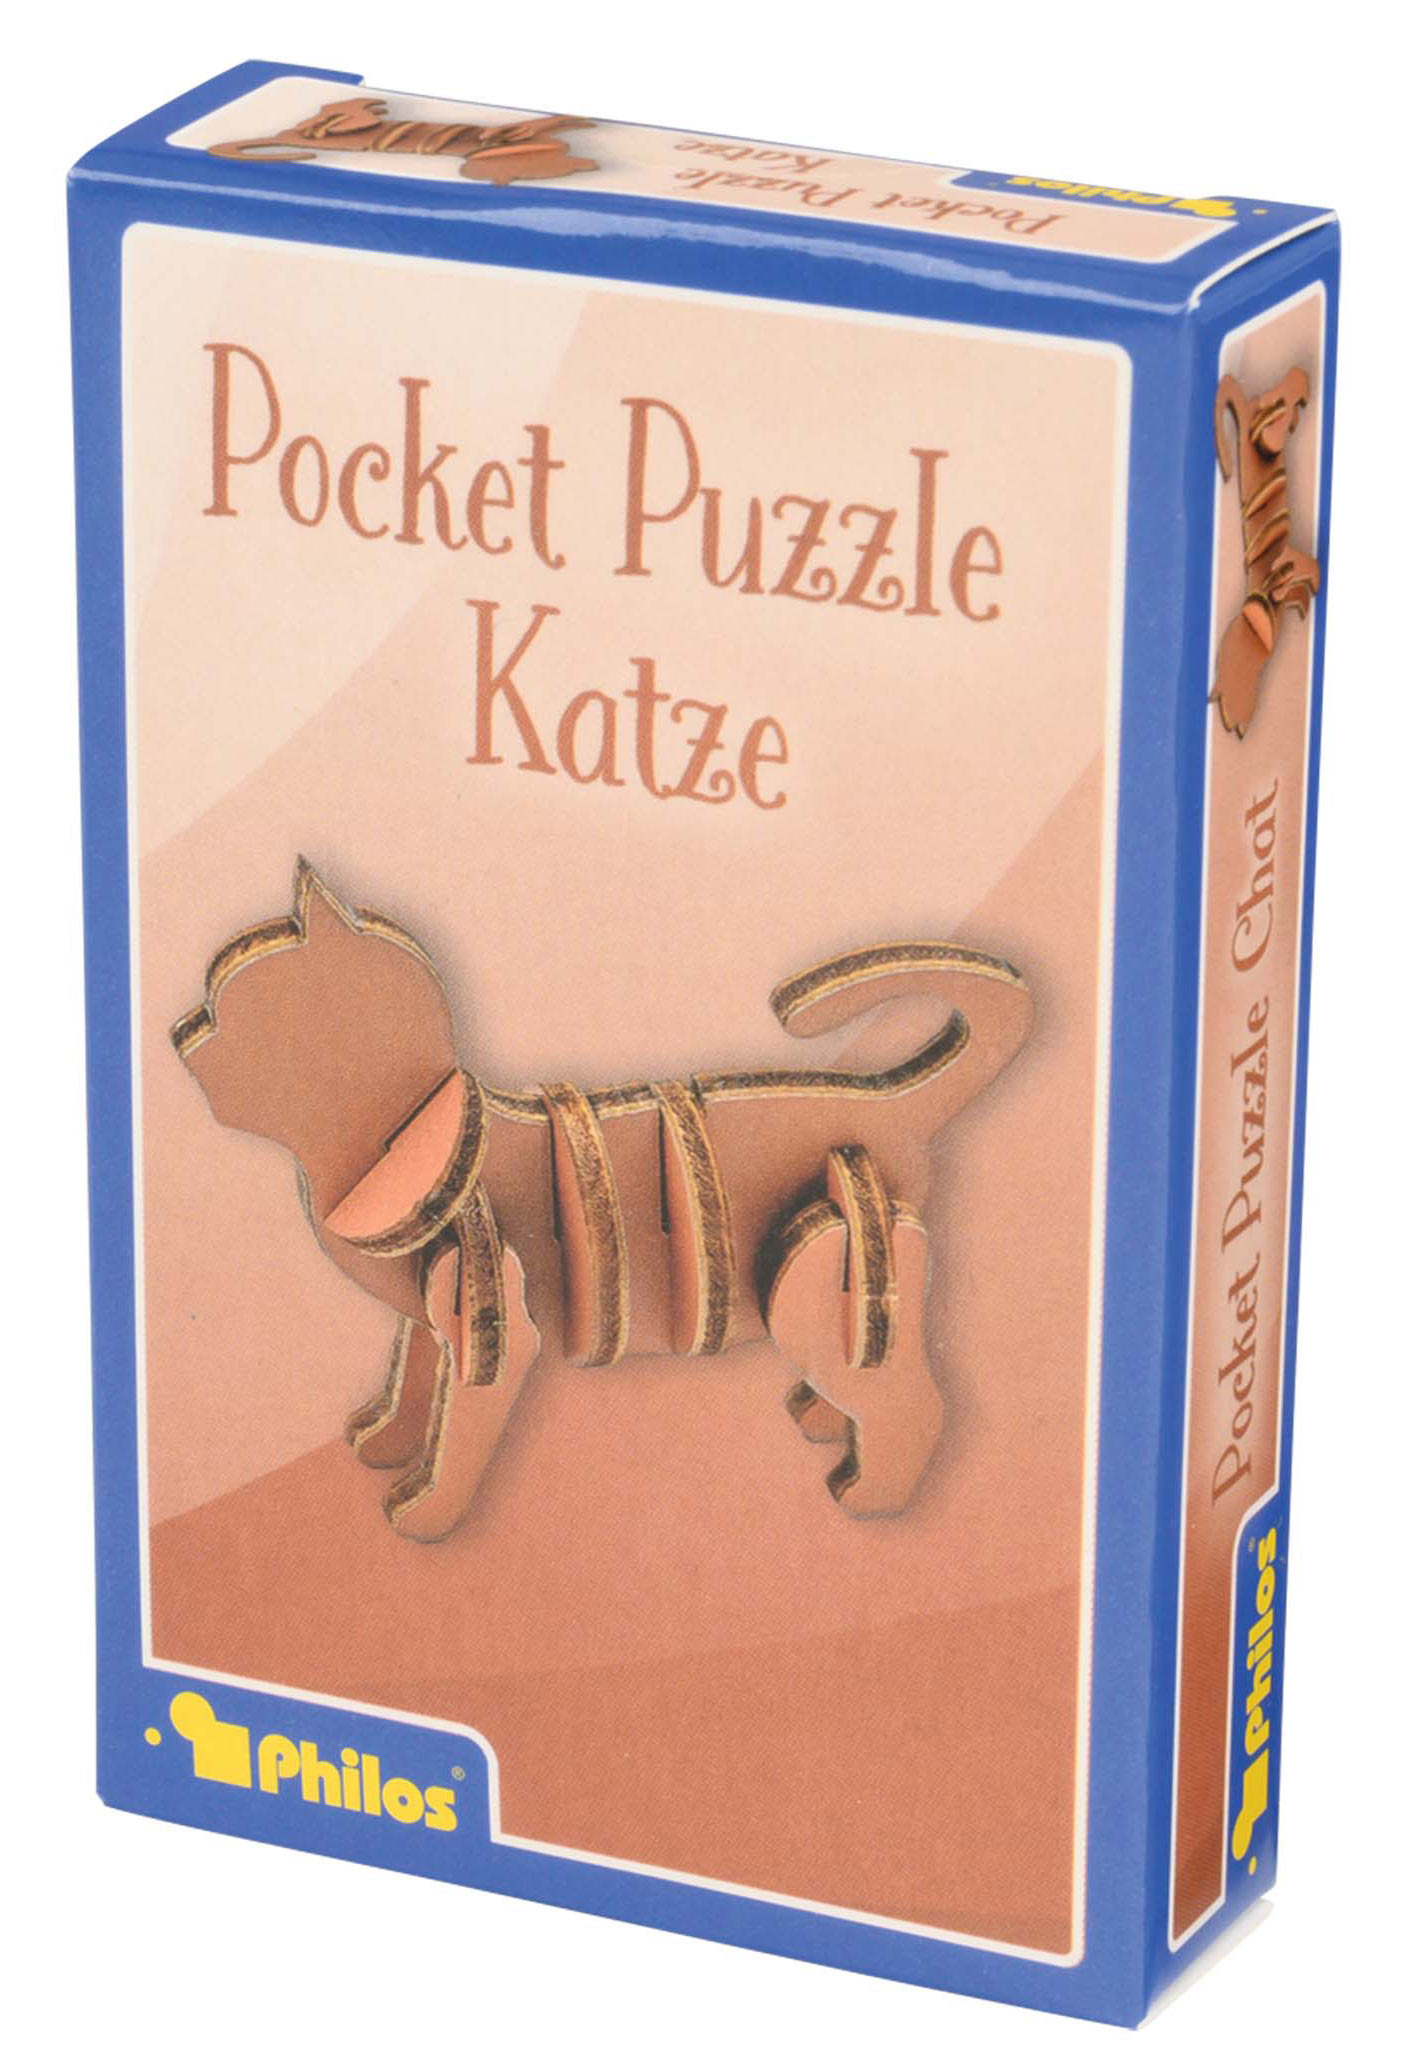 3D Pocket Puzzle, Katze